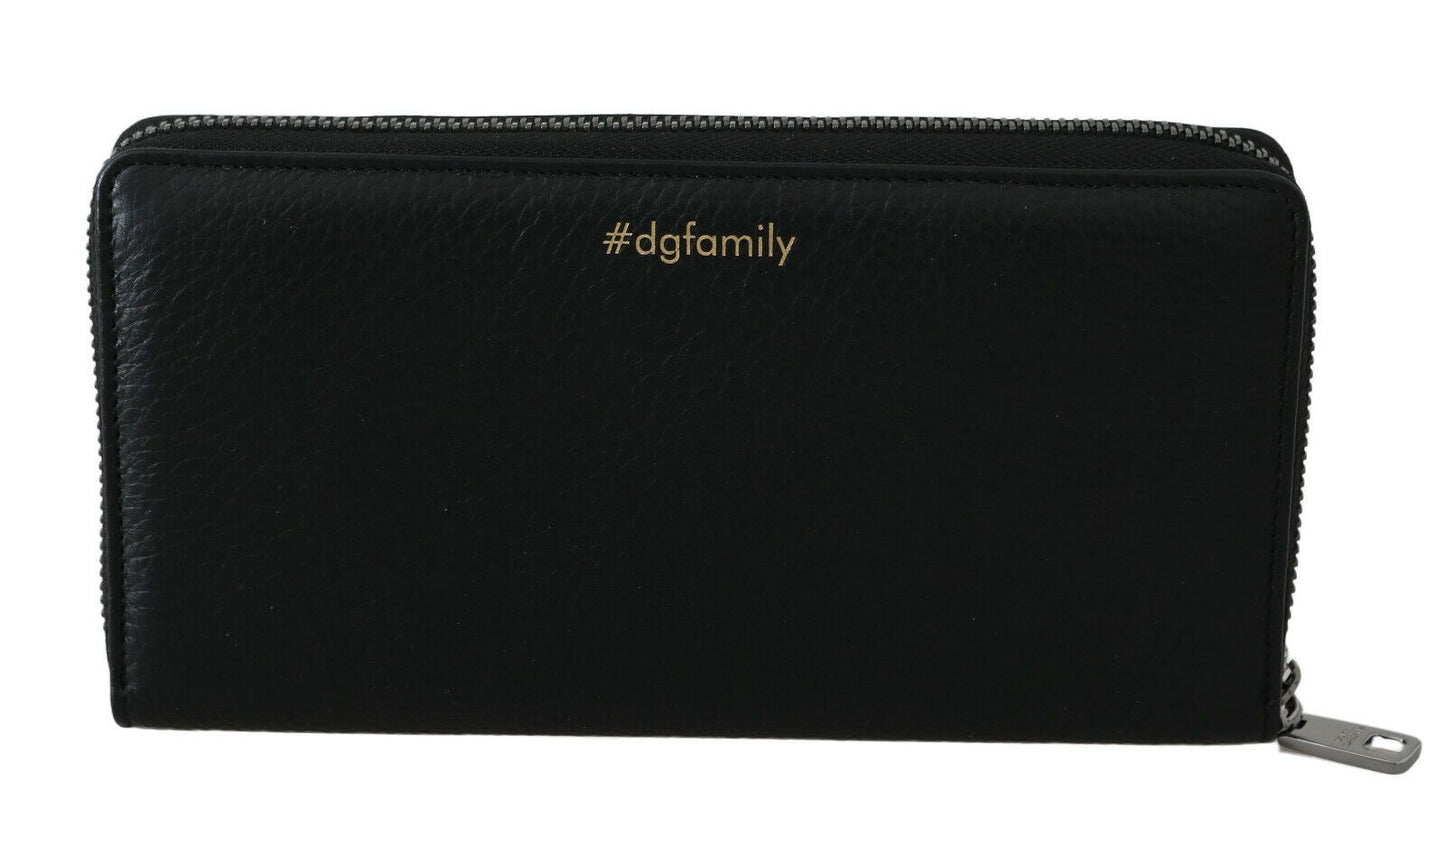 Dolce & Gabbana Black Blue Leder #dgfamily Reißverschluss Continental Wallet